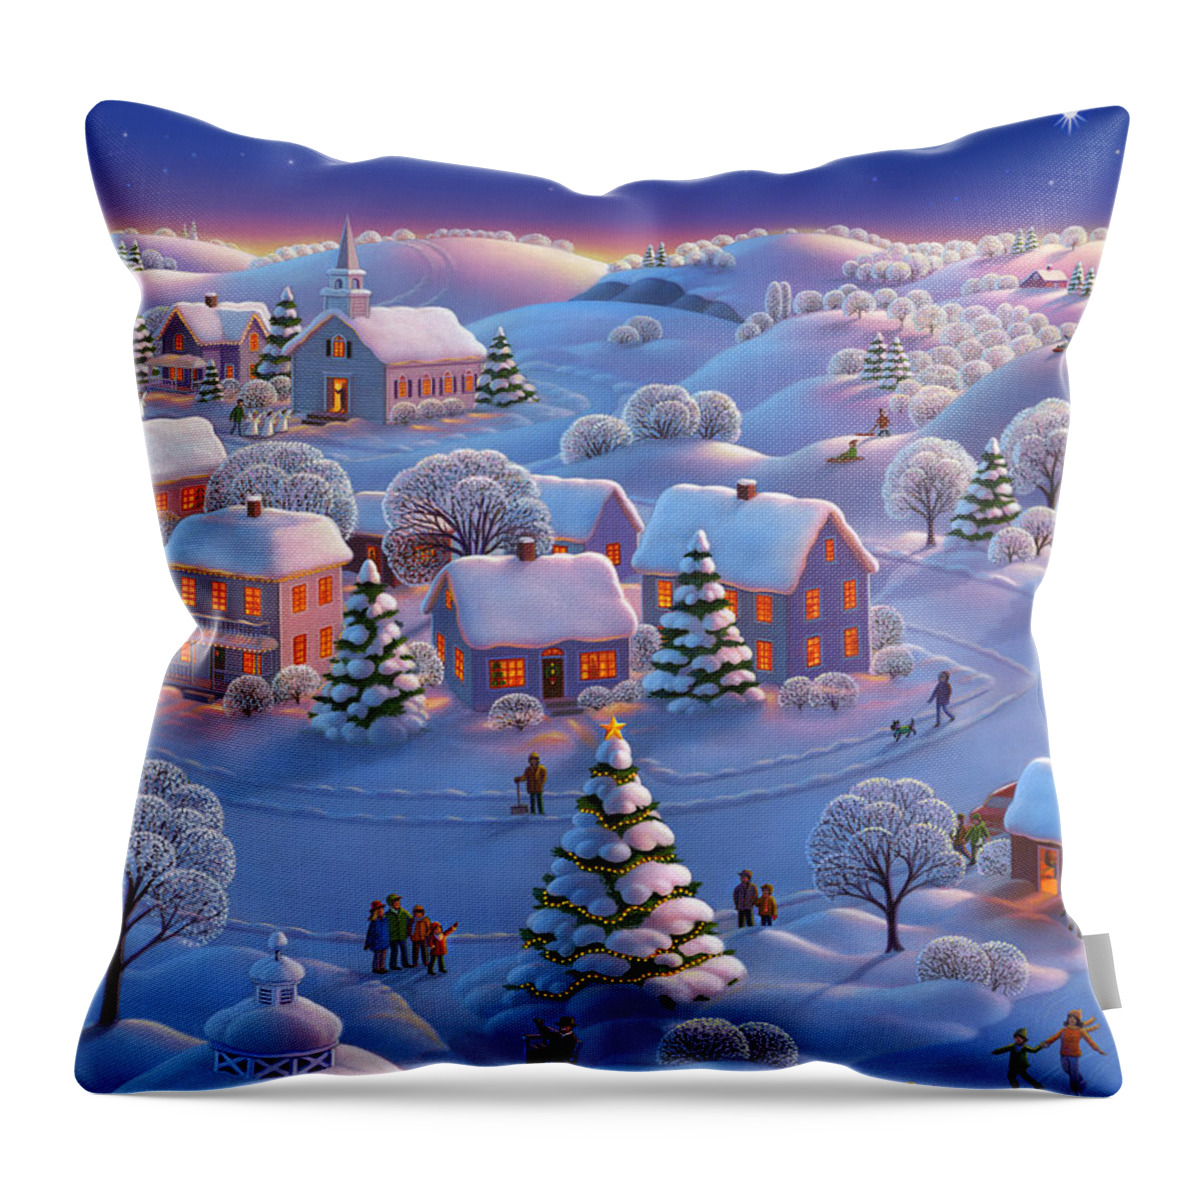 Winter Wonderland Throw Pillow featuring the painting Winter Wonderland by Robin Moline